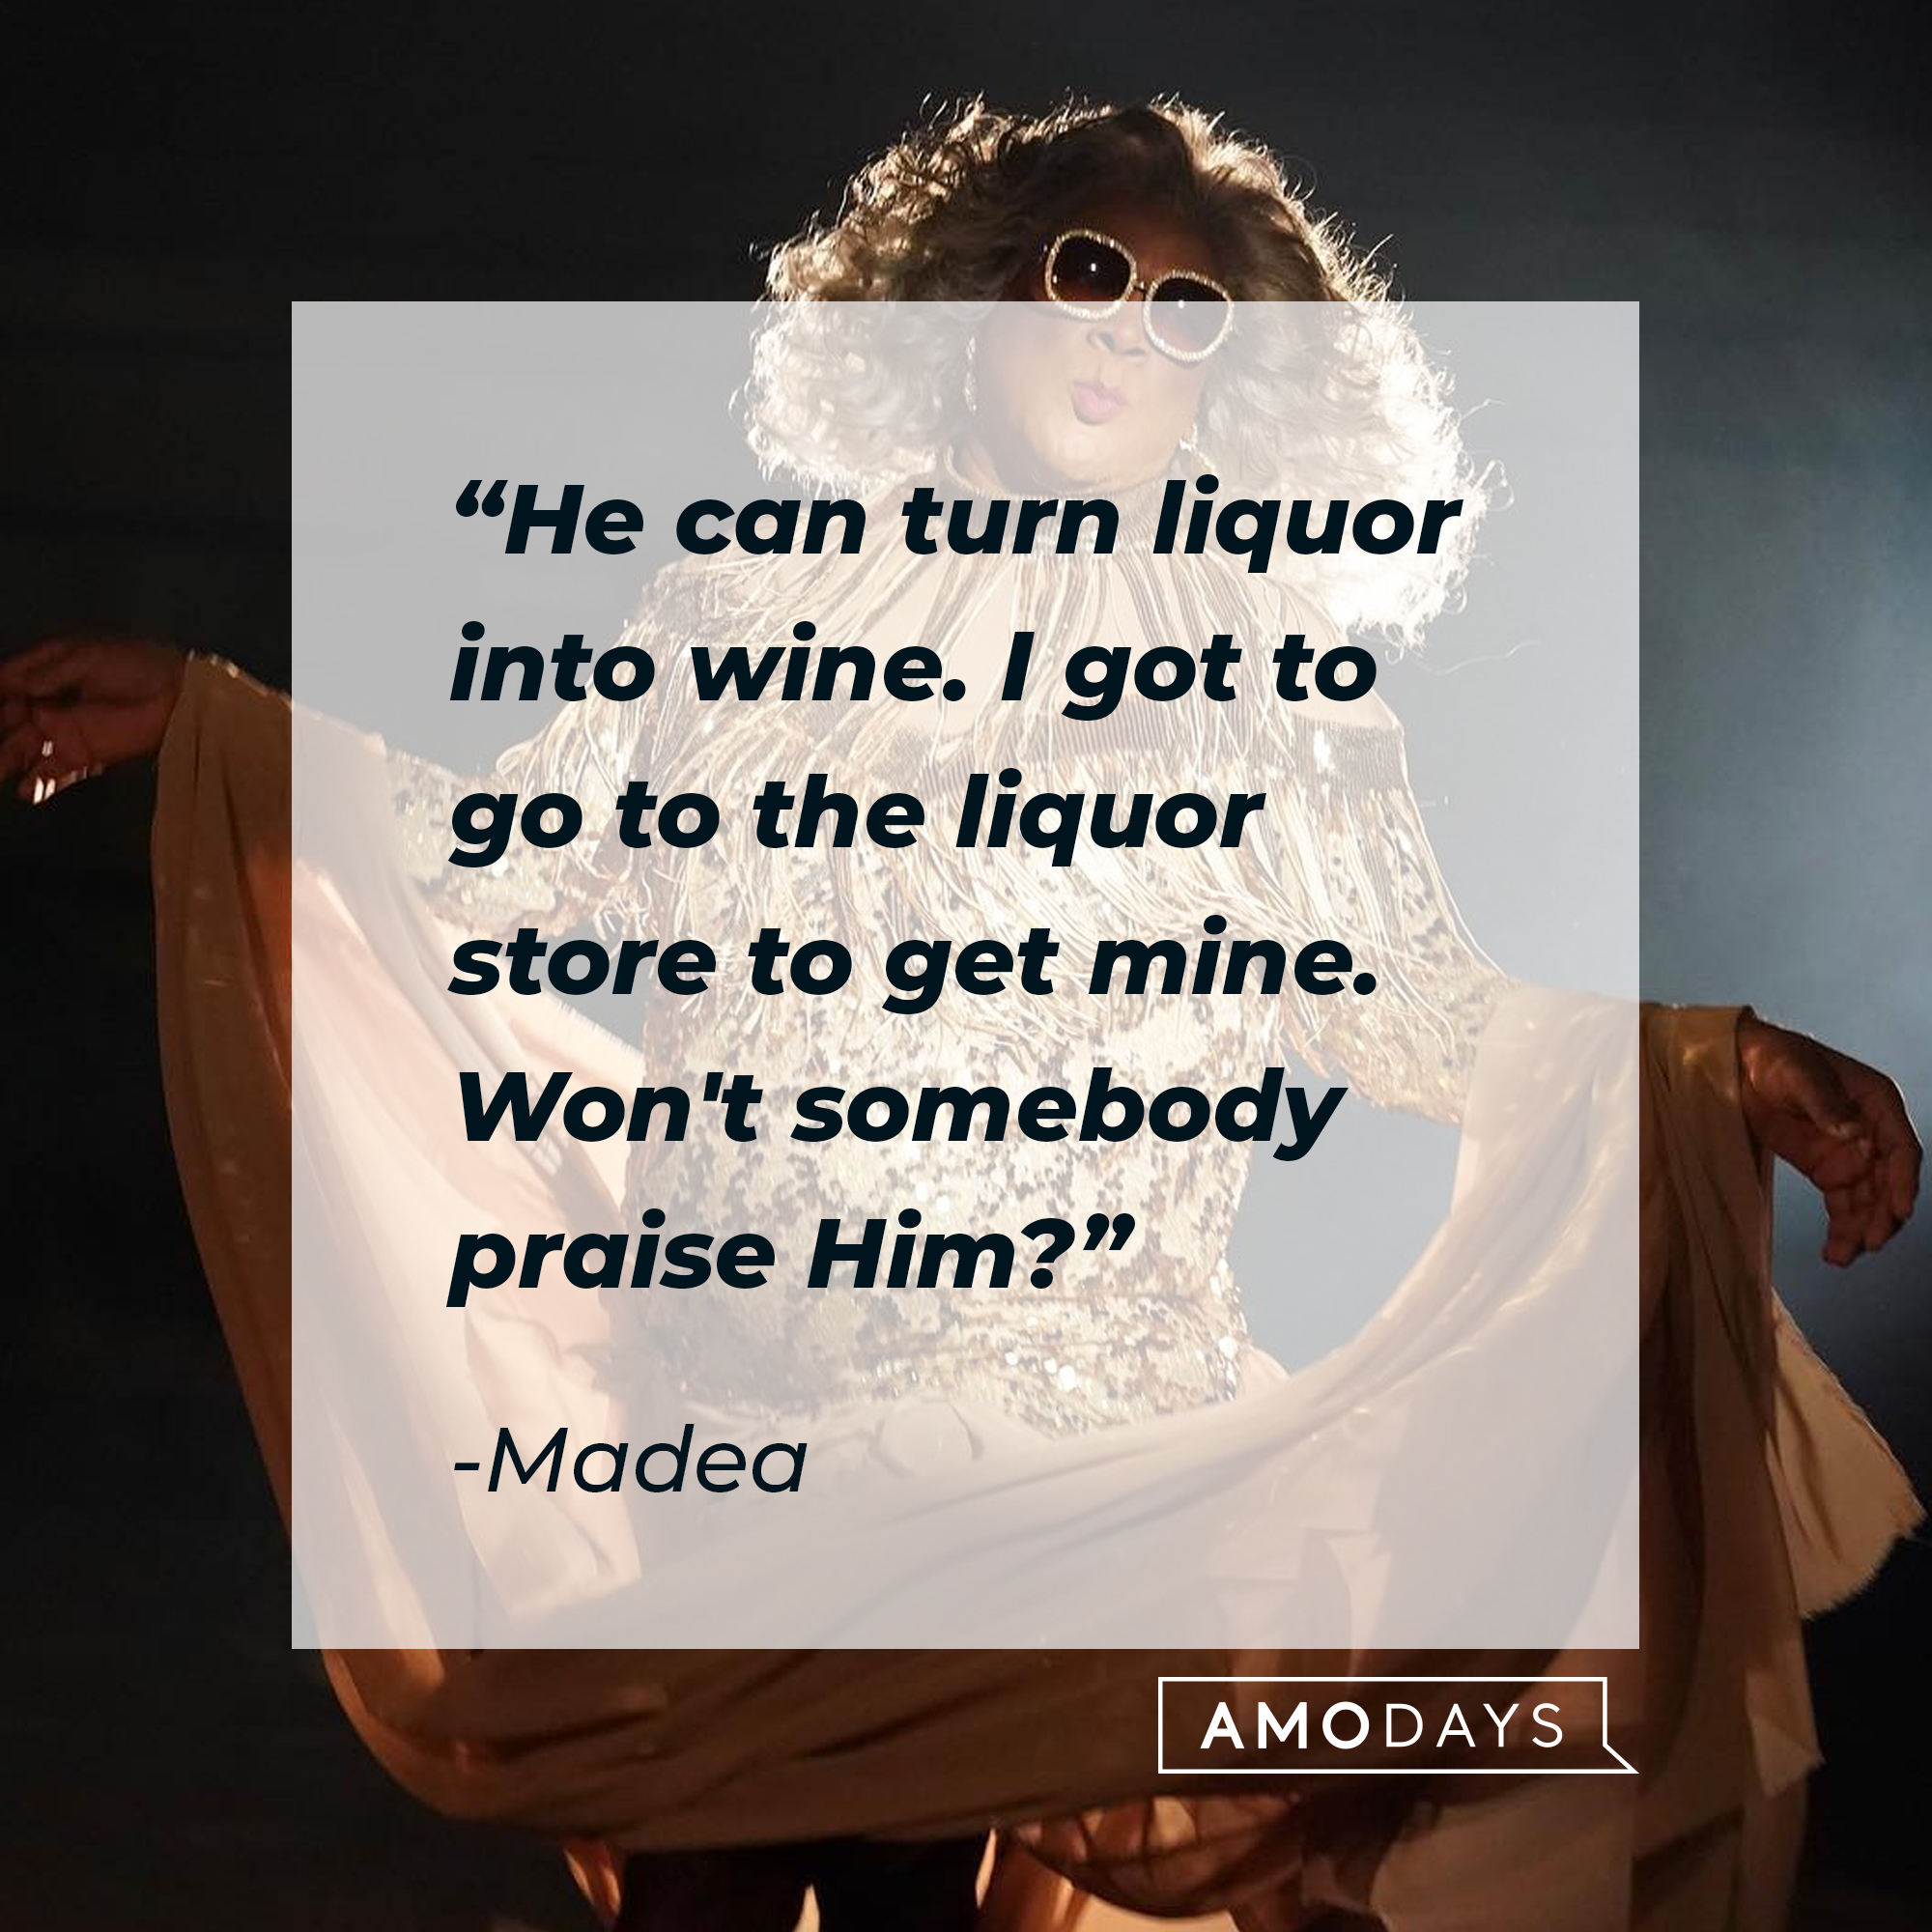 Madea's quote: "He can turn liquor into wine. I got to go to the liquor store to get mine. Won't somebody praise Him?" | Source: Facebook.com/madea